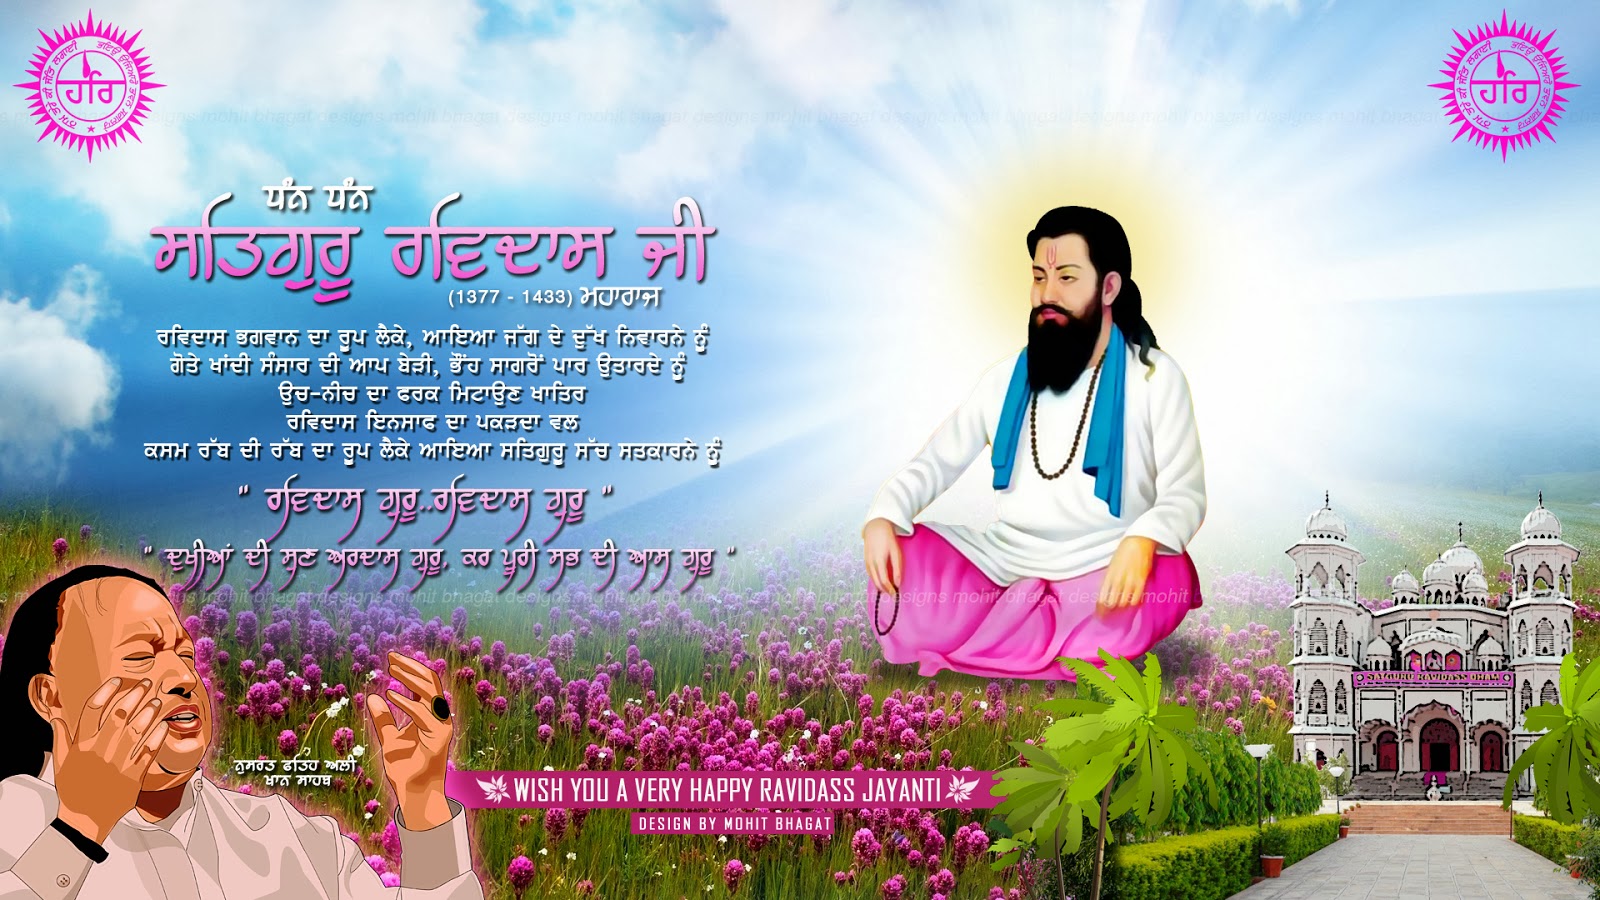 Mohit Bhagat Designs - Shri Guru Ravidass Ji , HD Wallpaper & Backgrounds